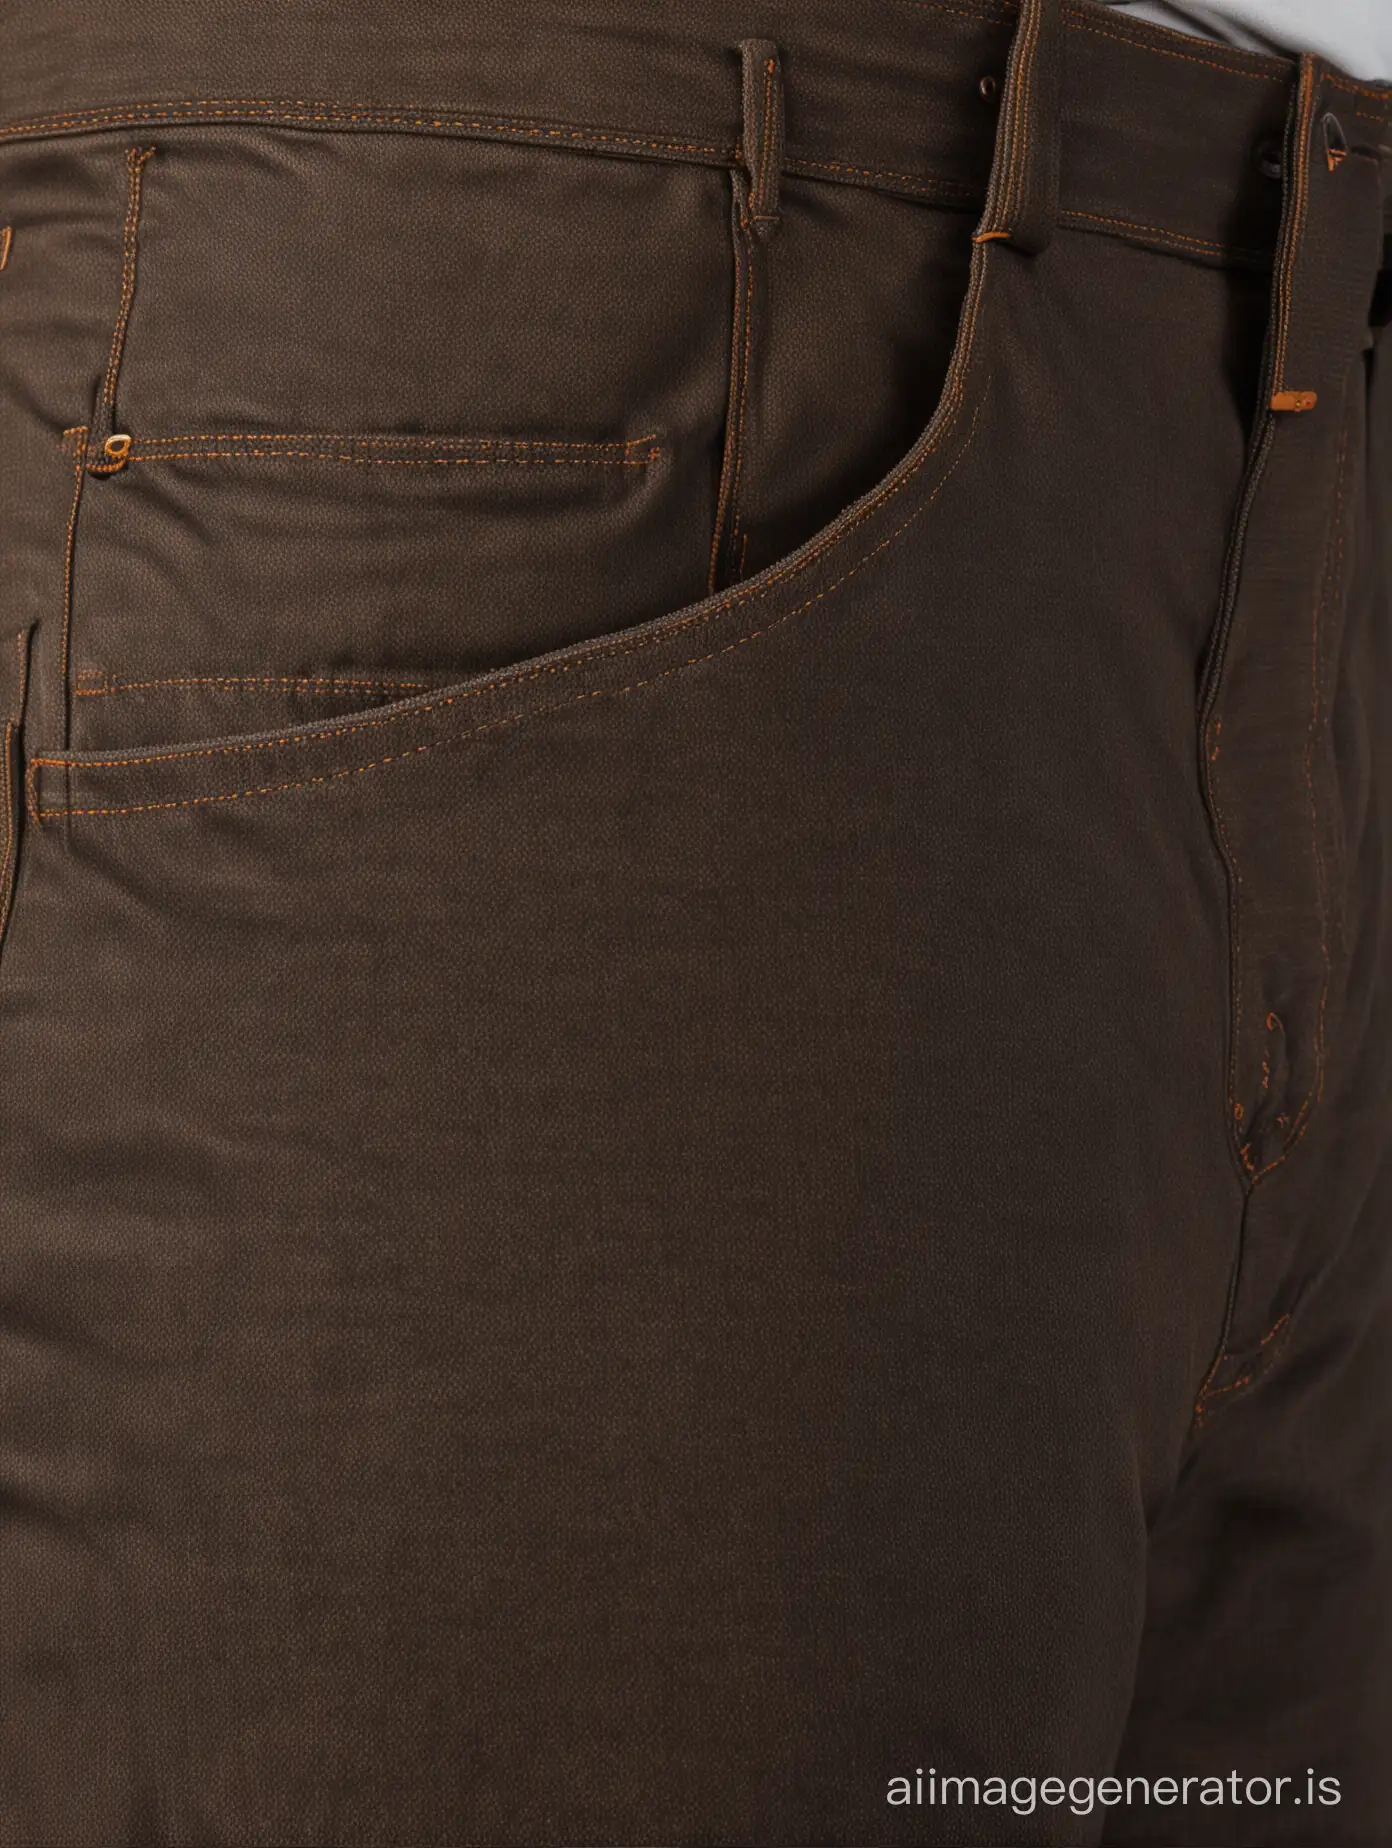 Stylish-EnzymeWashed-Dark-Light-Brown-Jeans-with-Utility-Pocket